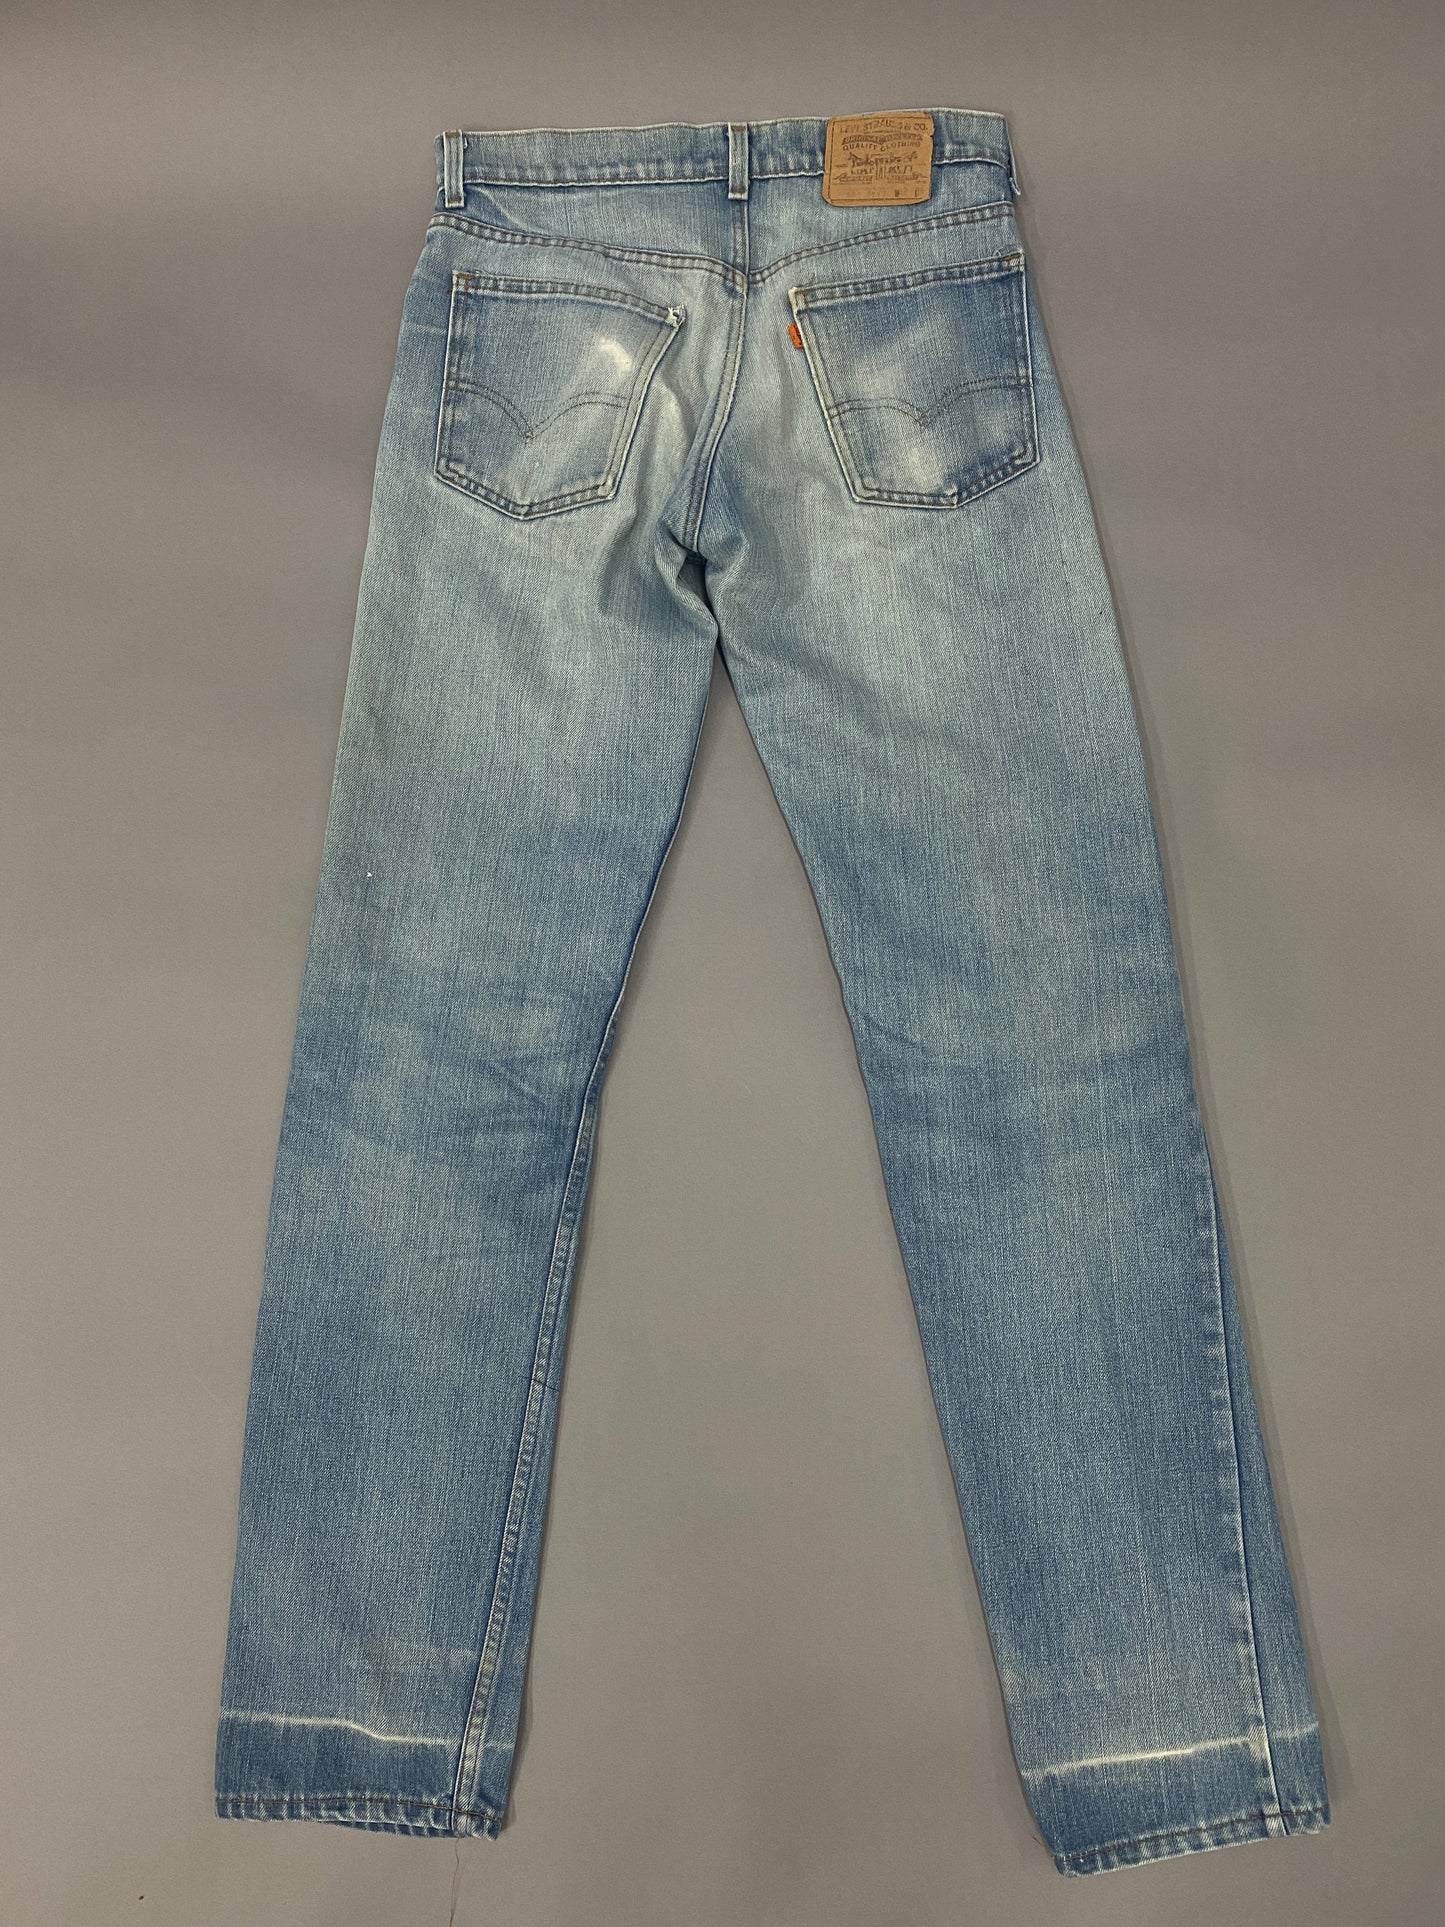 Jeans Levi's 505 Orange Tab - 32 x 36